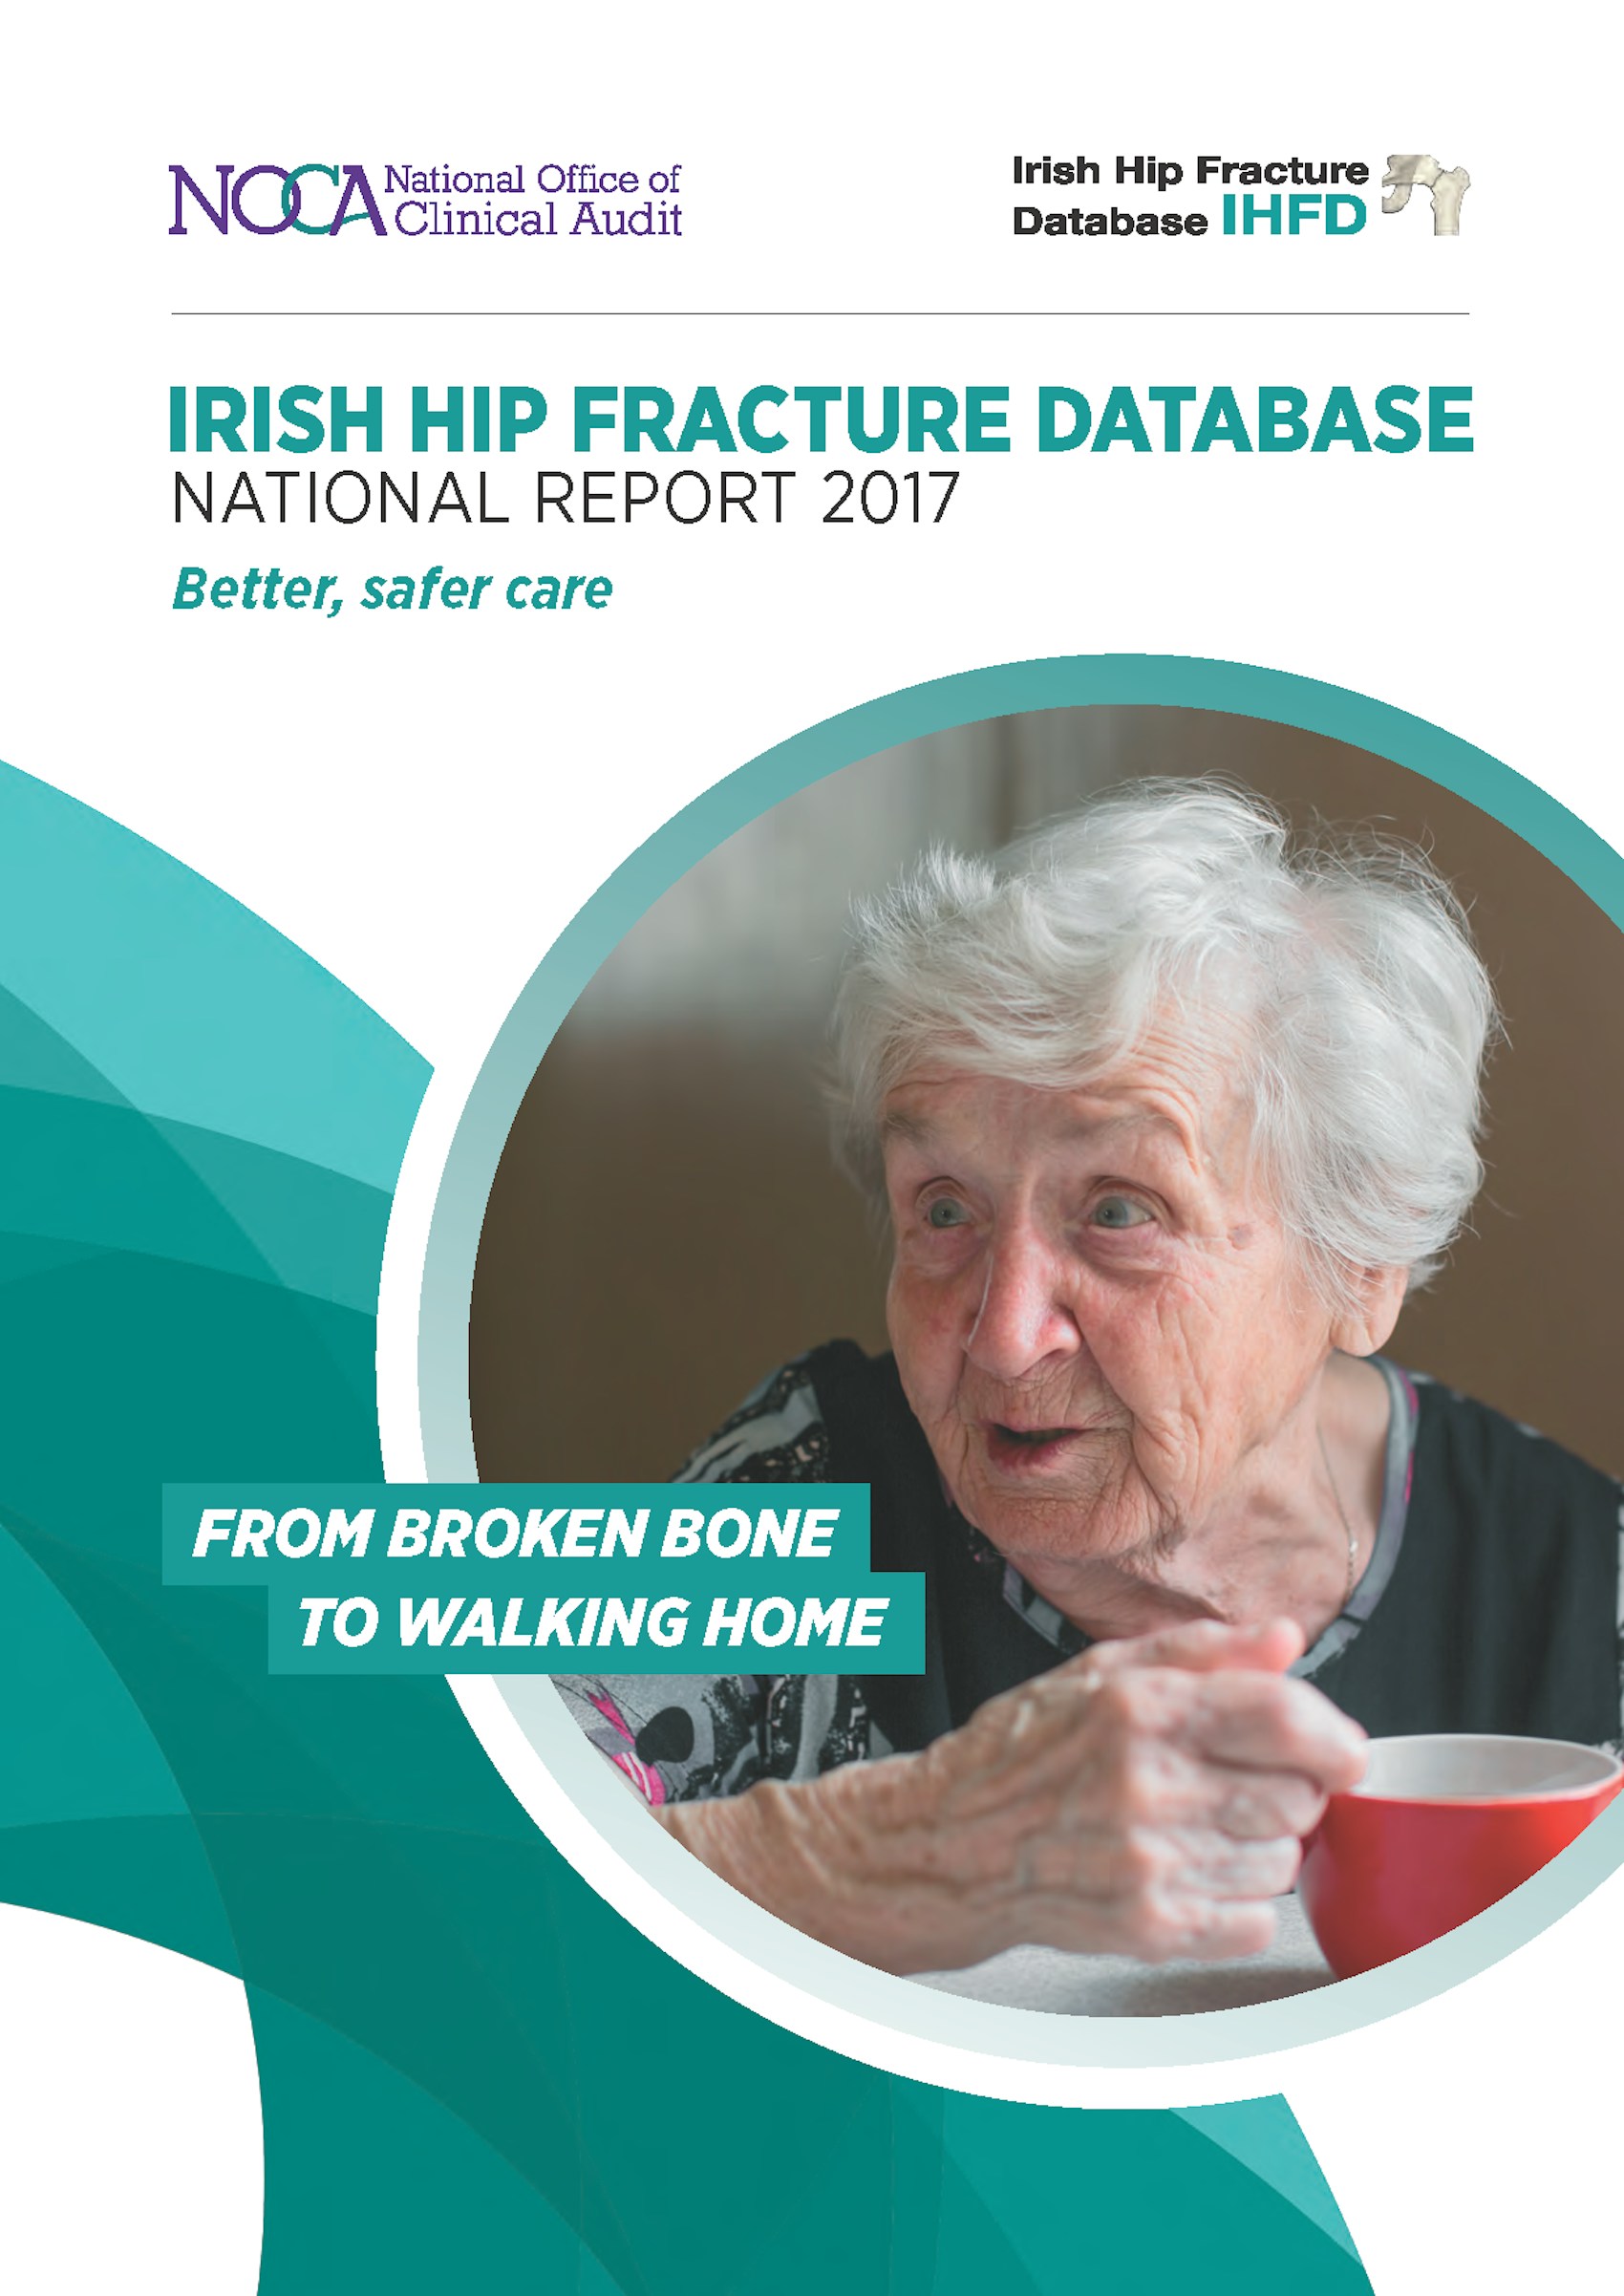 Quality improvement focus at the Irish Hip Fracture Meeting 2018